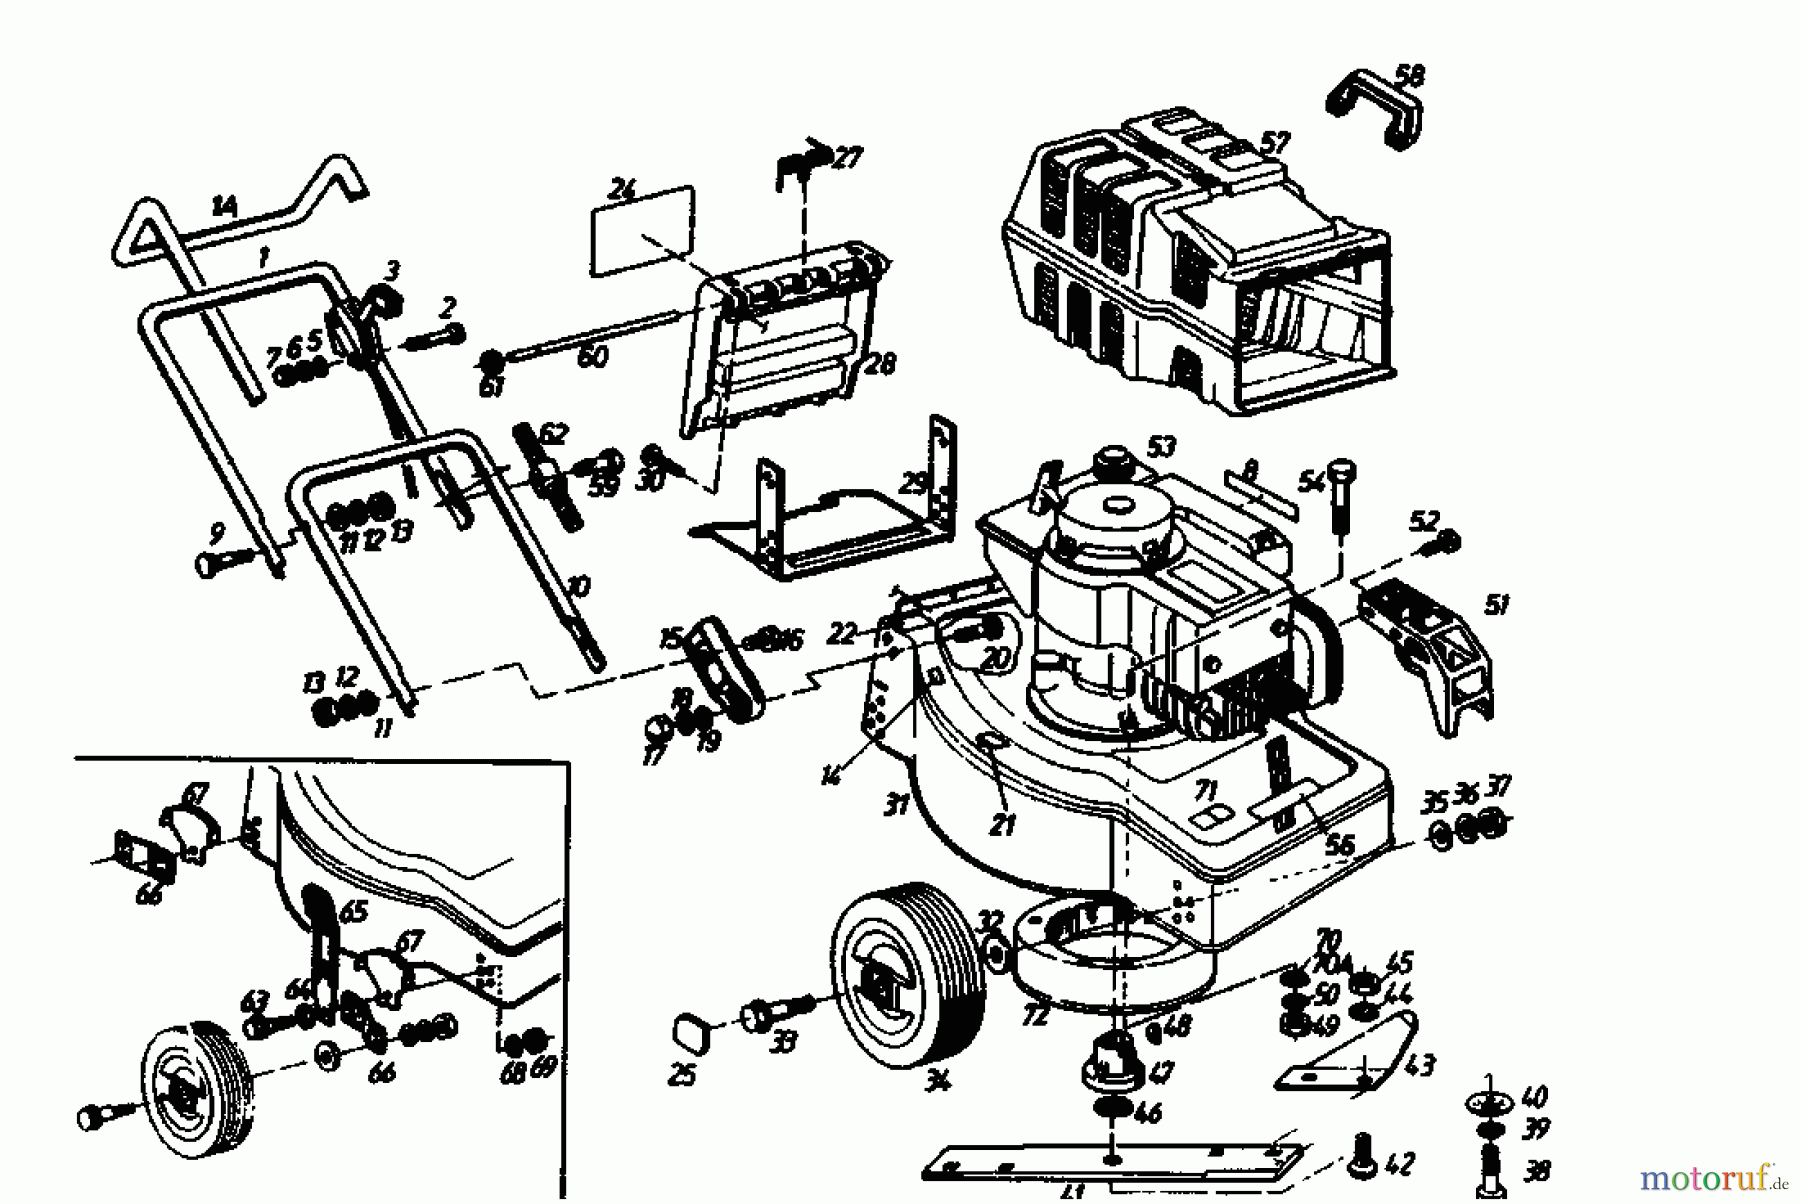  Golf Petrol mower BS 02880.02  (1989) Basic machine